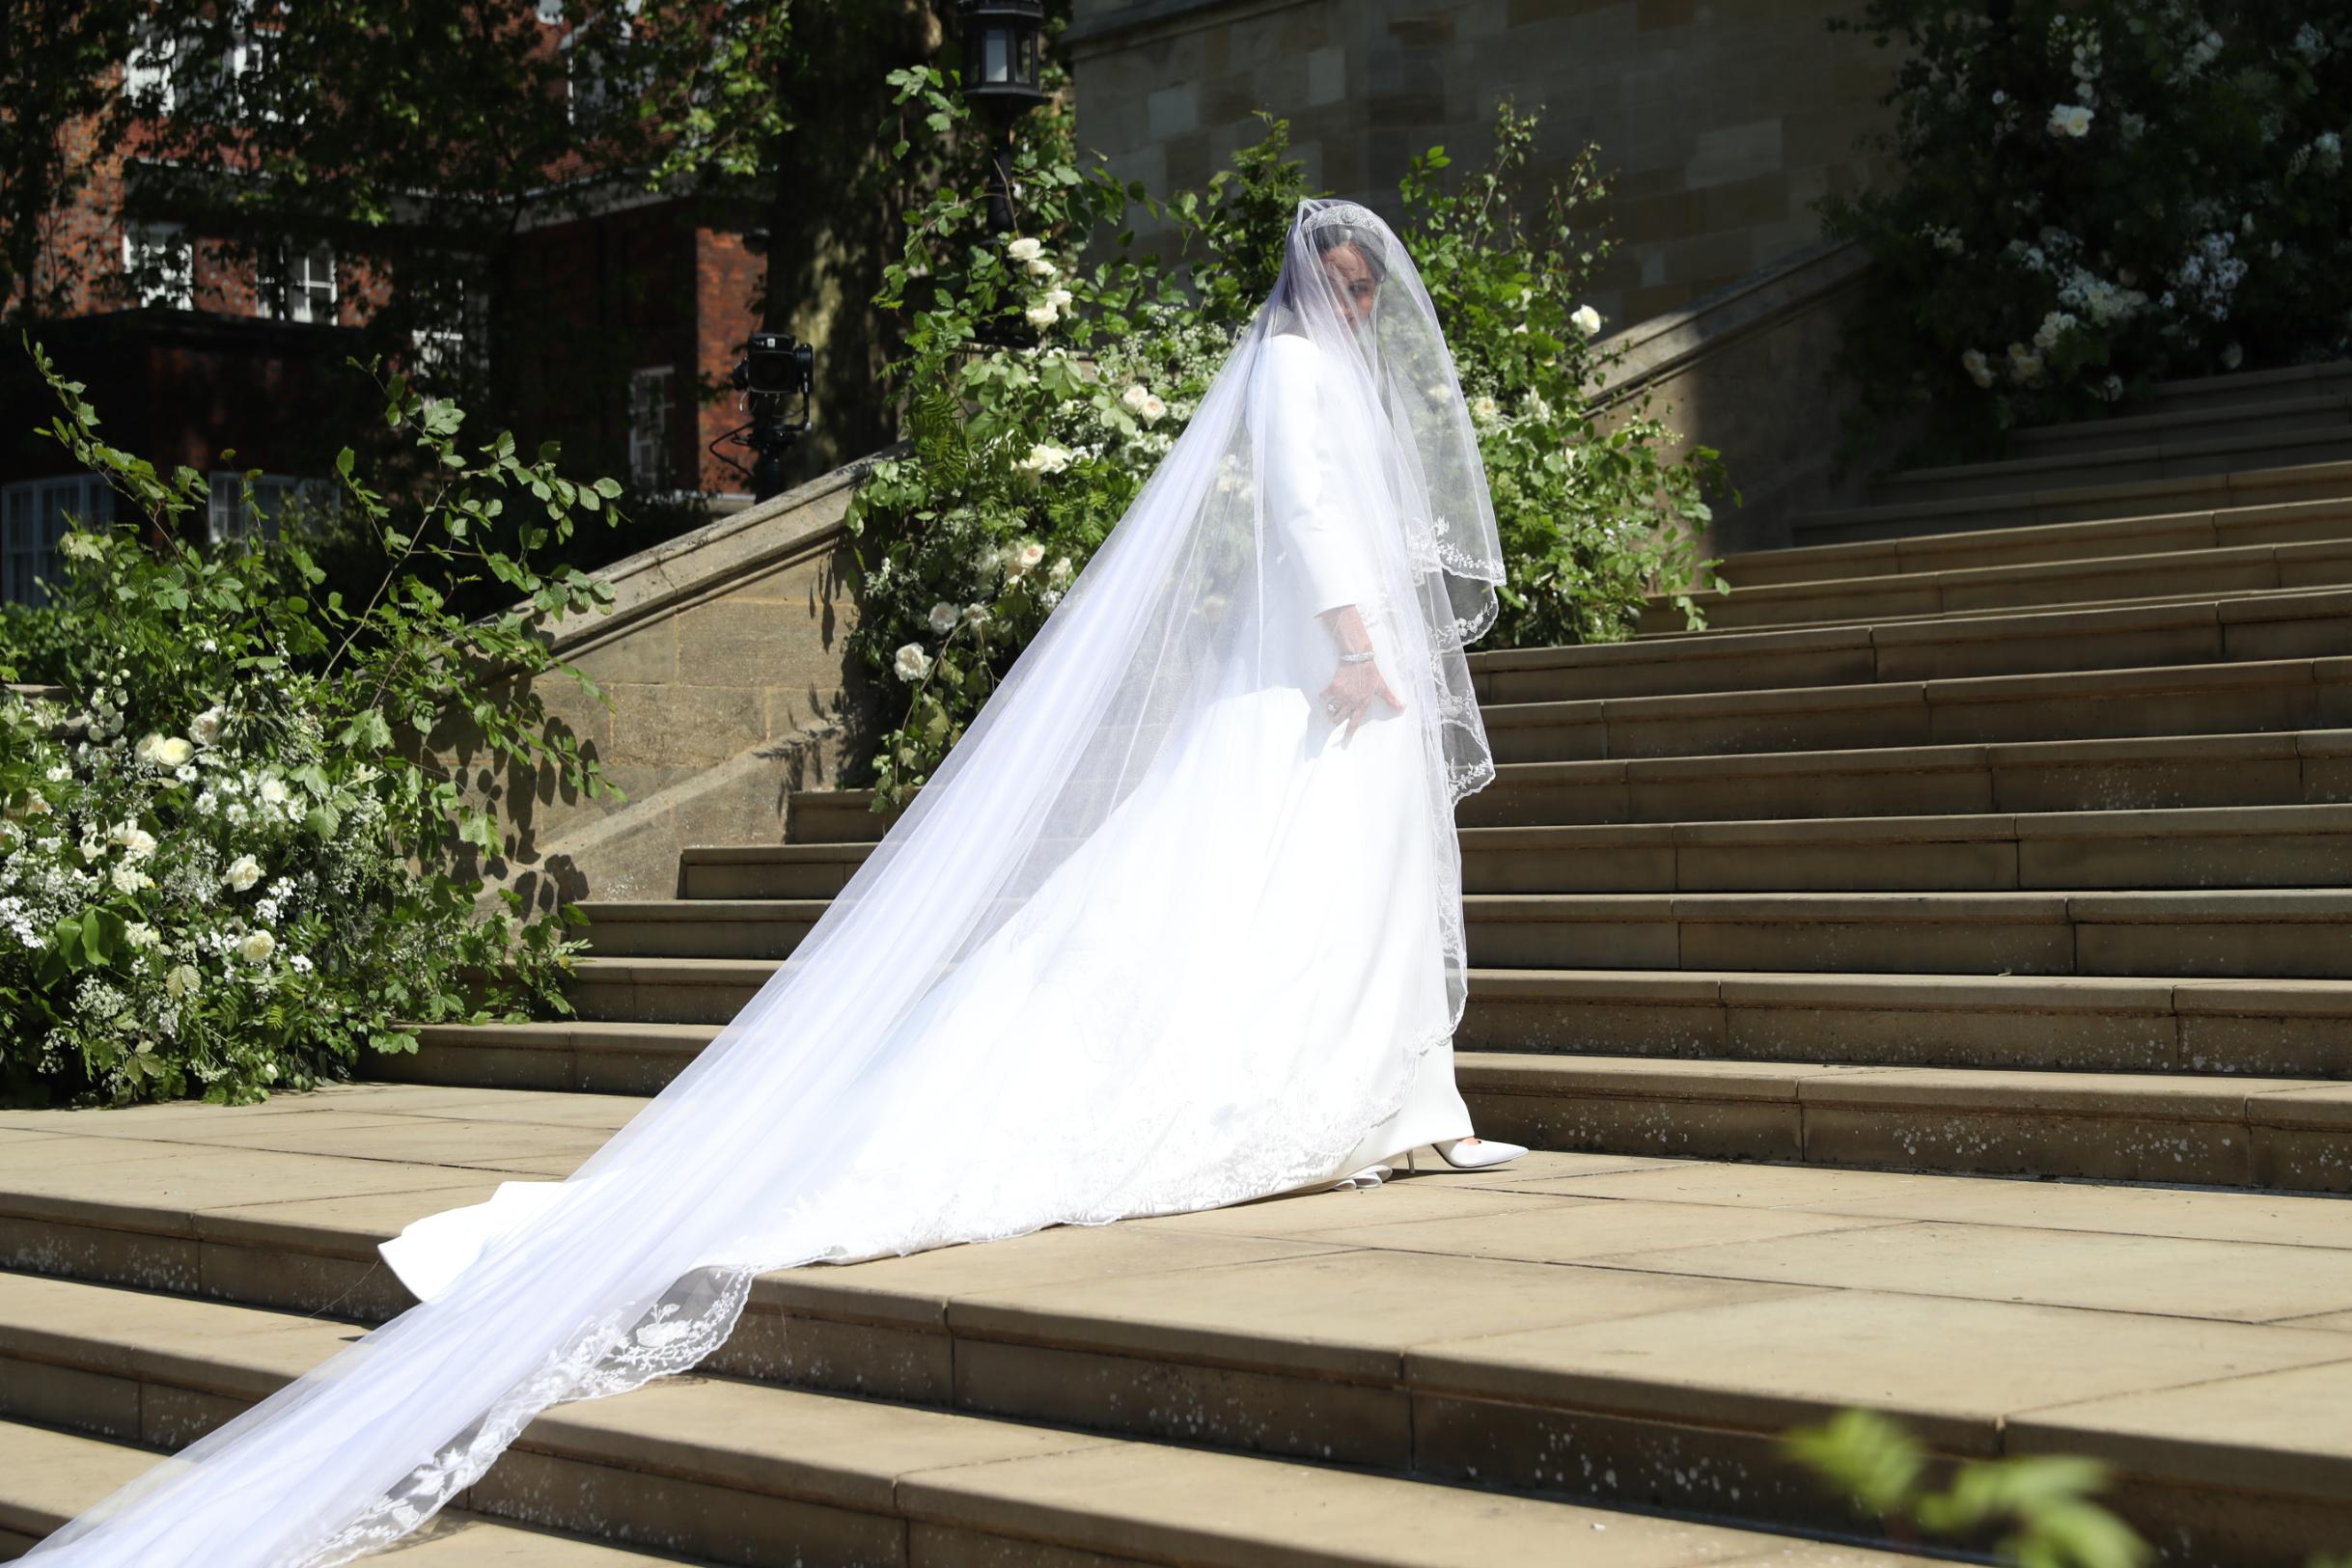 meghan markle wedding dress on display